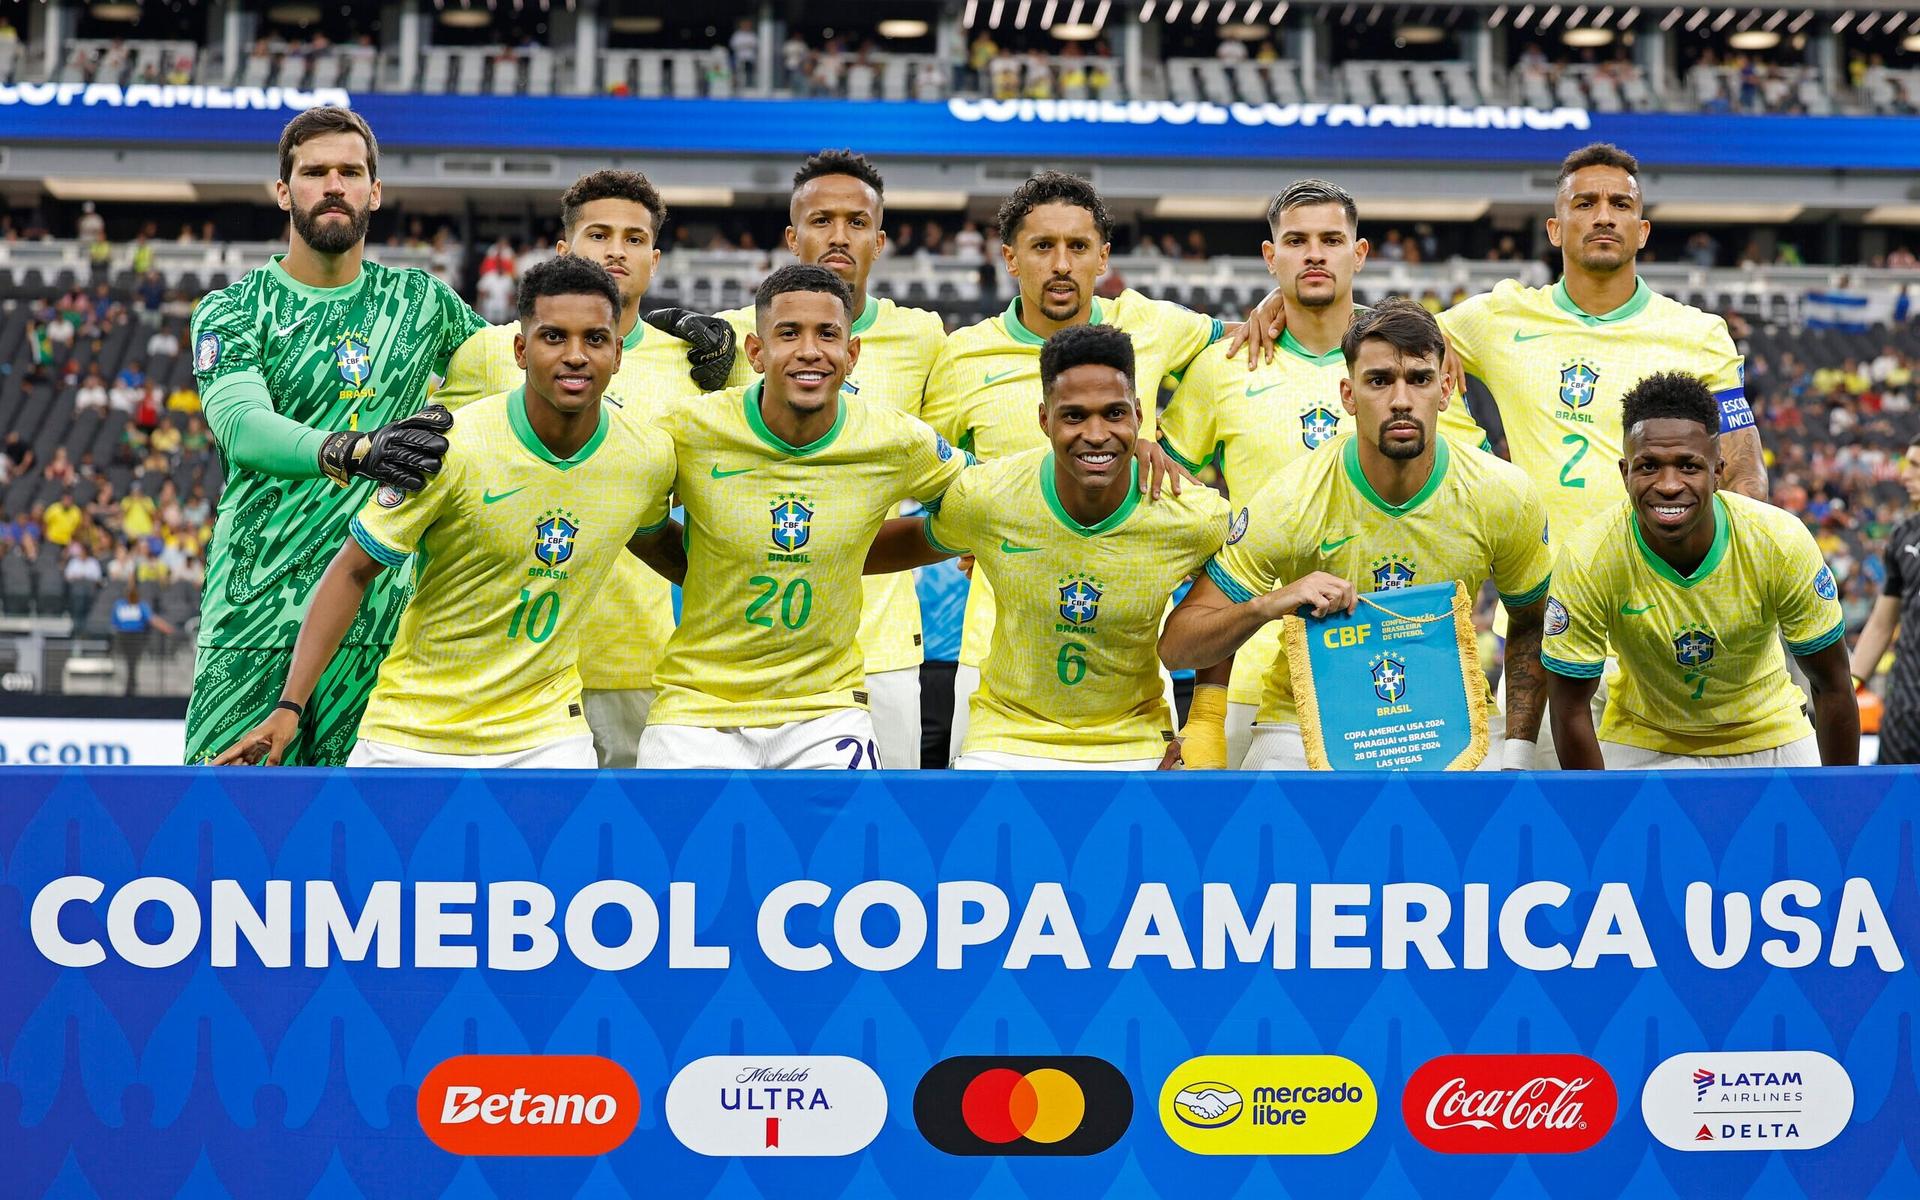 Brasil x Colômbia - Figure 1